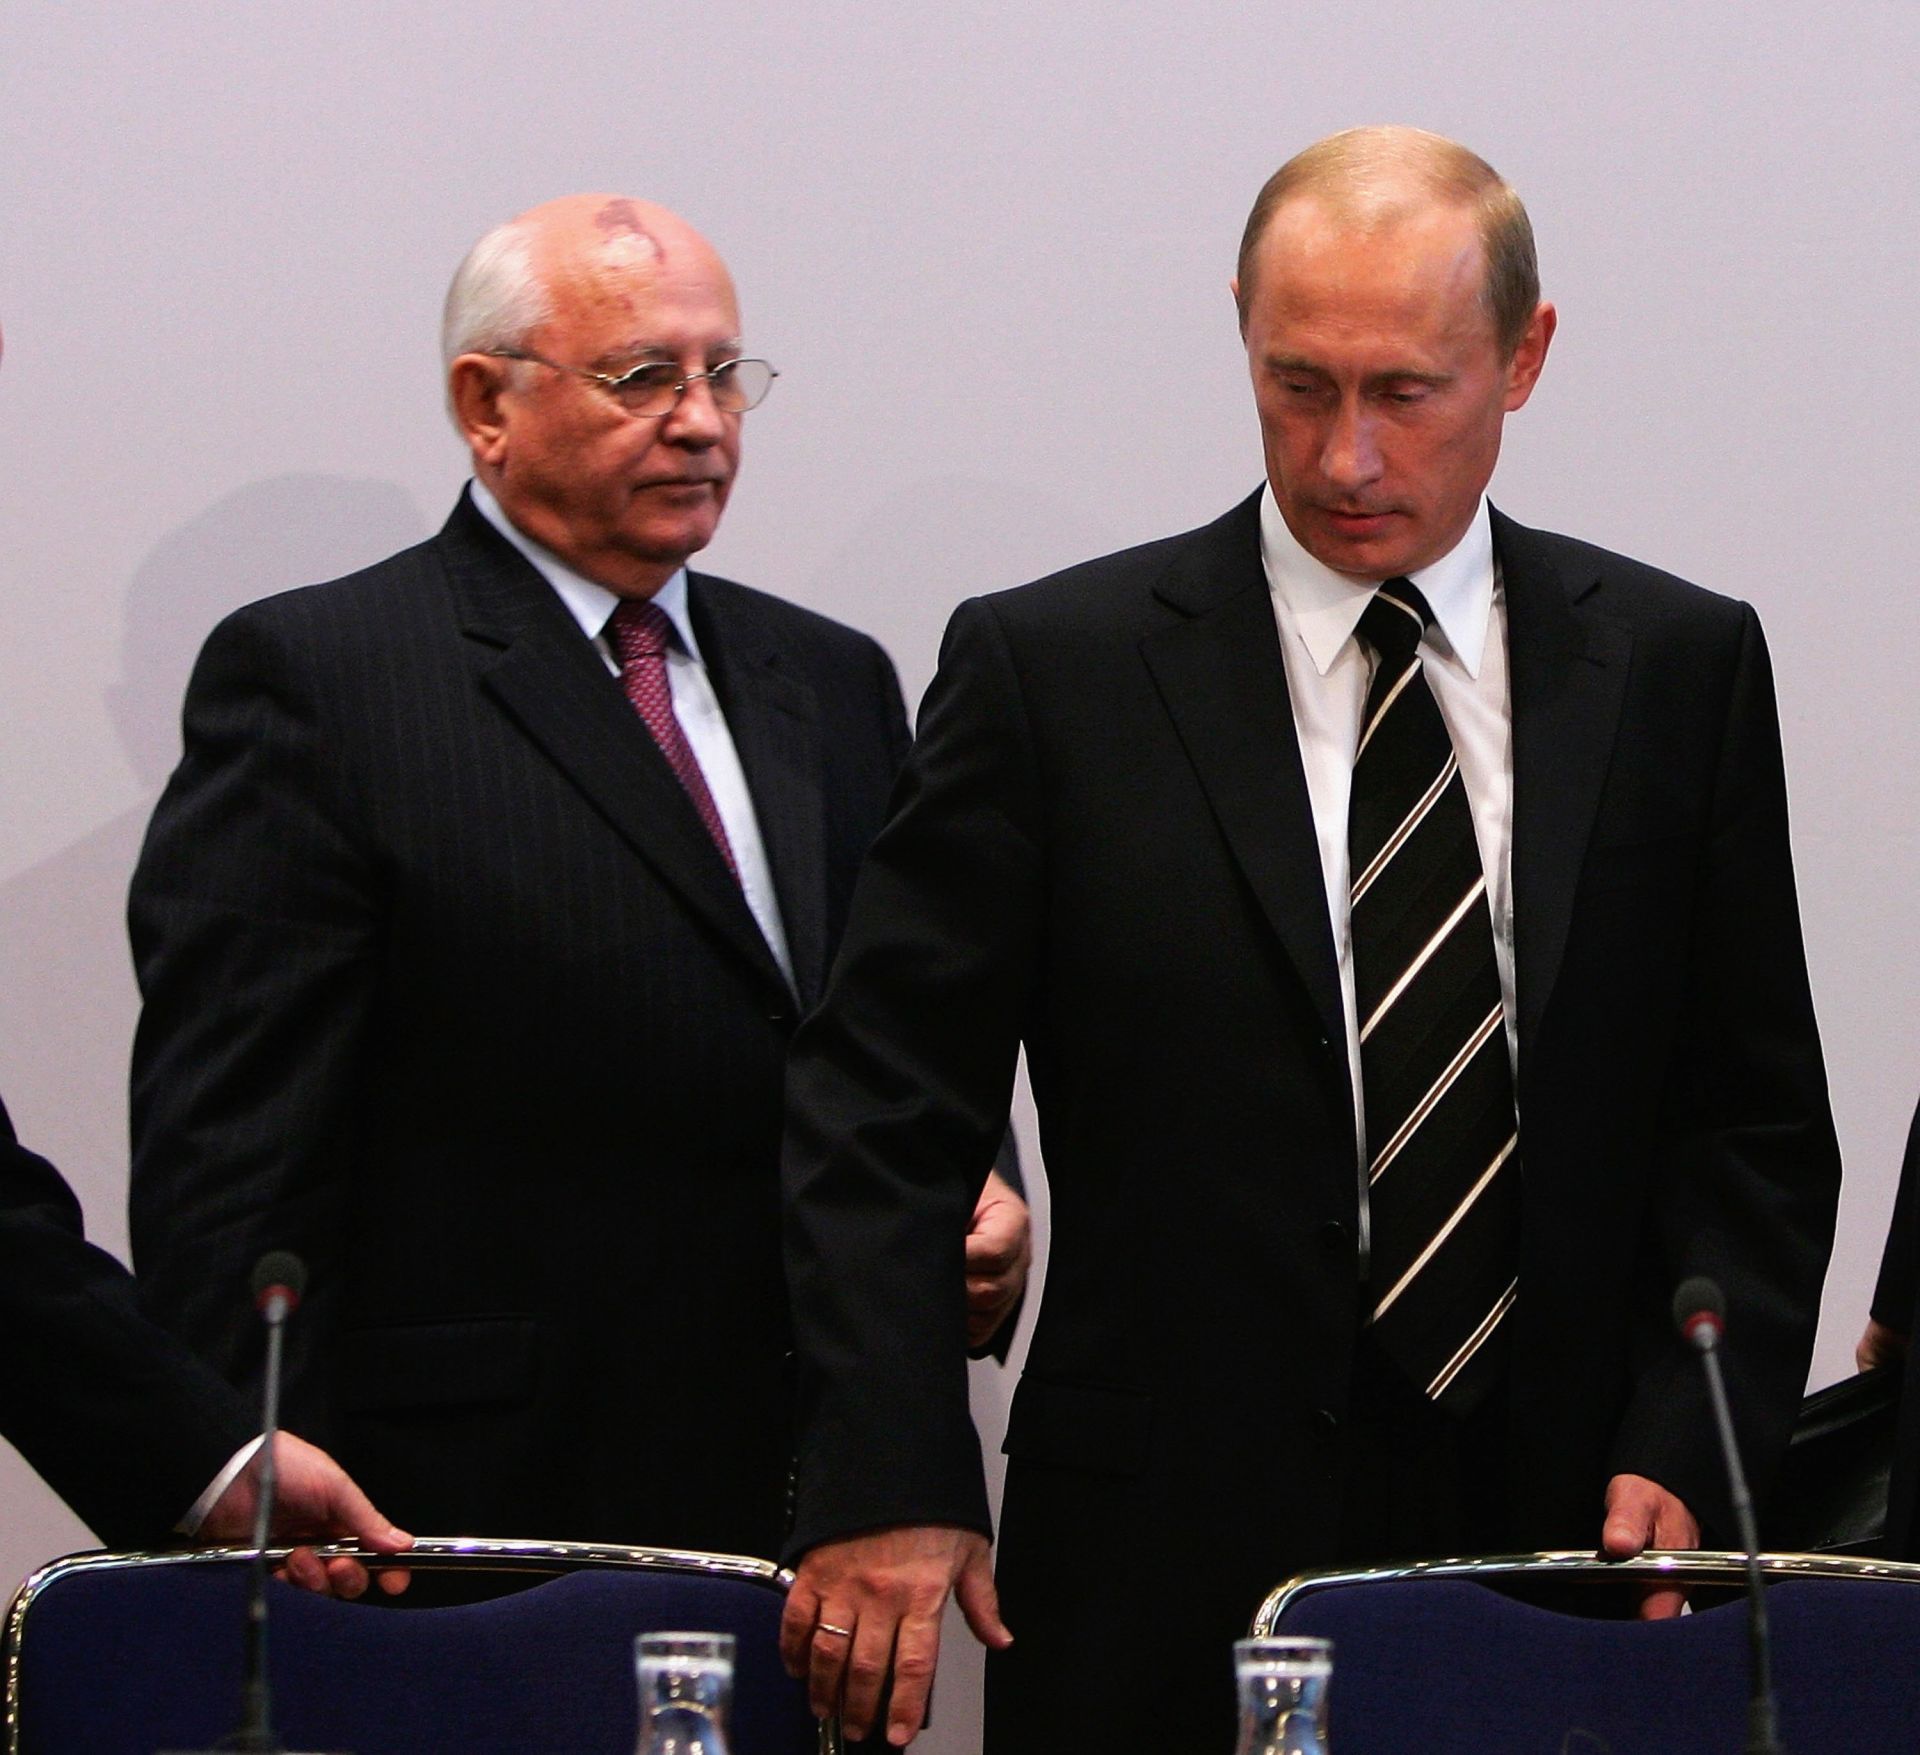 Според Горбачов, Путин е бил неправилно информиран